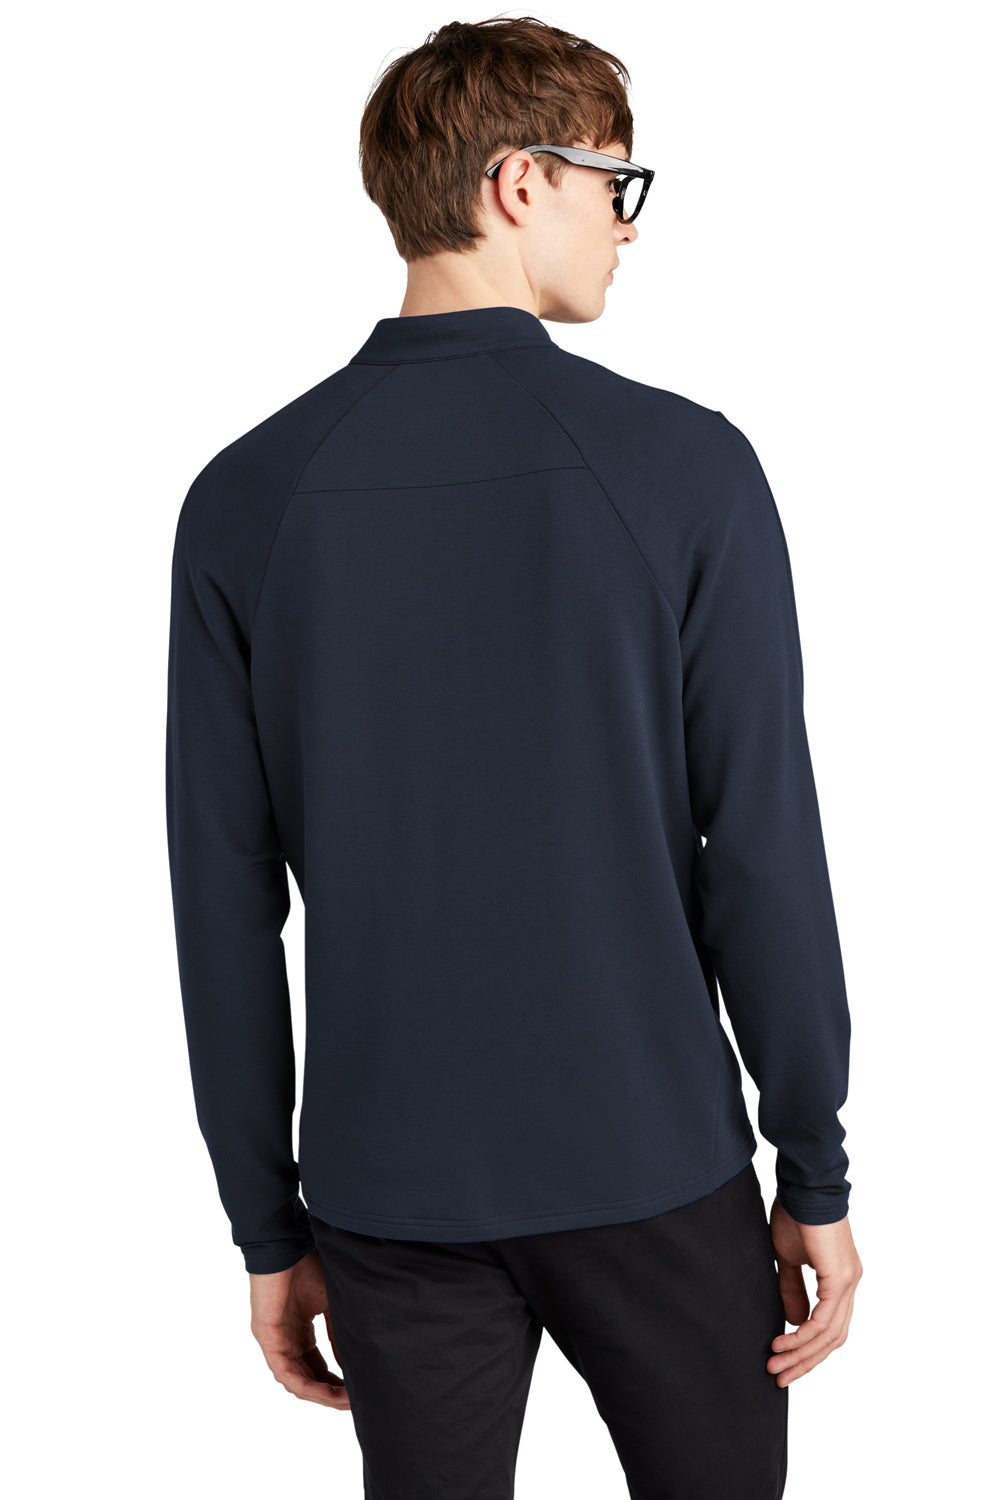 Mercer+Mettle MM3010 Stretch 1/4 Zip Sweatshirt Night Navy Blue Back